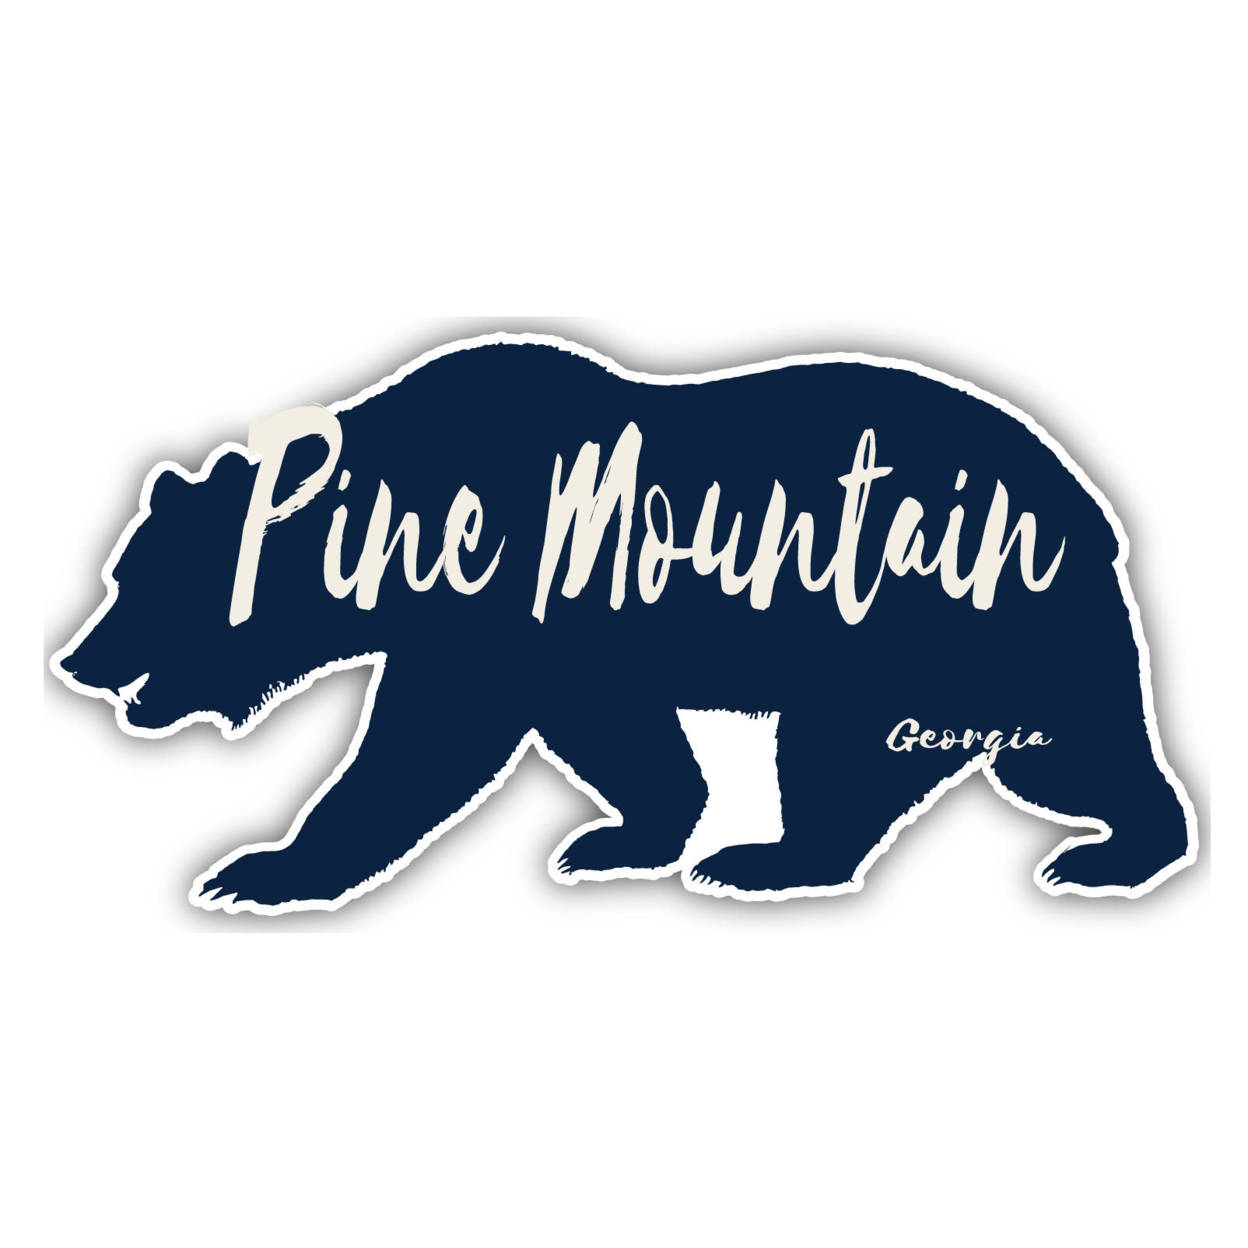 Pine Mountain Georgia Souvenir Decorative Stickers (Choose Theme And Size) - Single Unit, 2-Inch, Camp Life